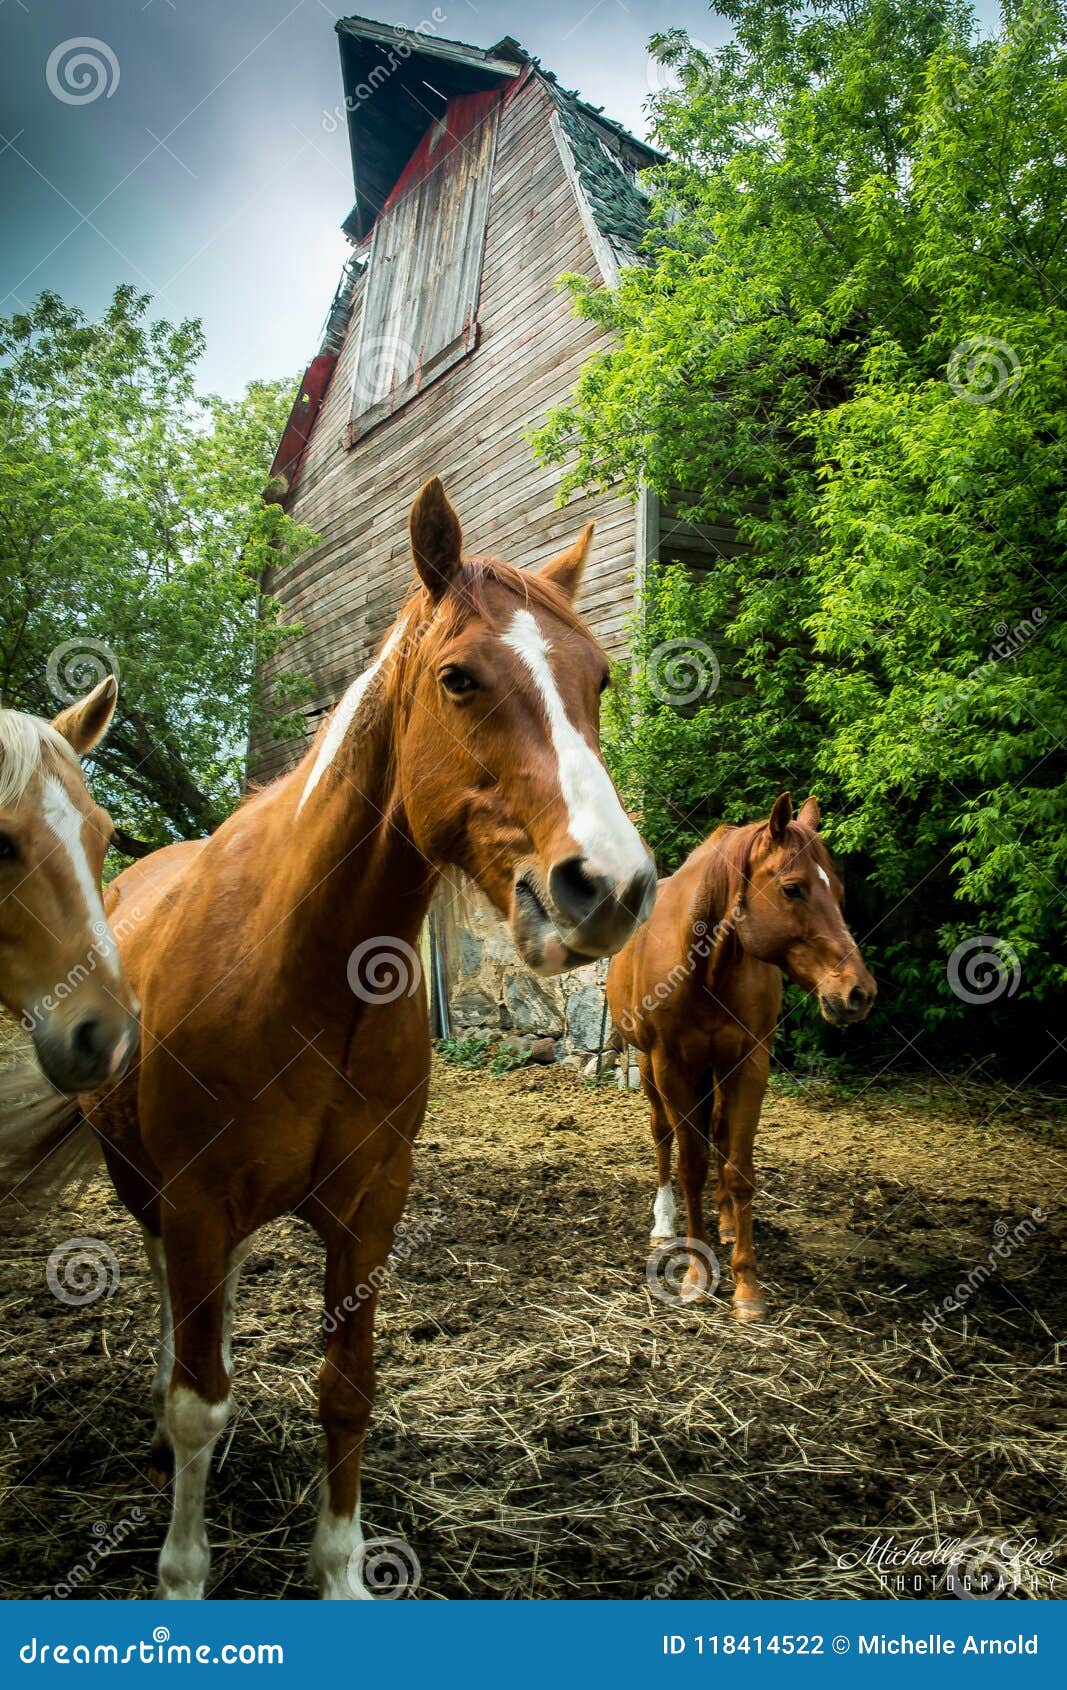 Quarter Horse Galloping Stock by naturalhorses on DeviantArt